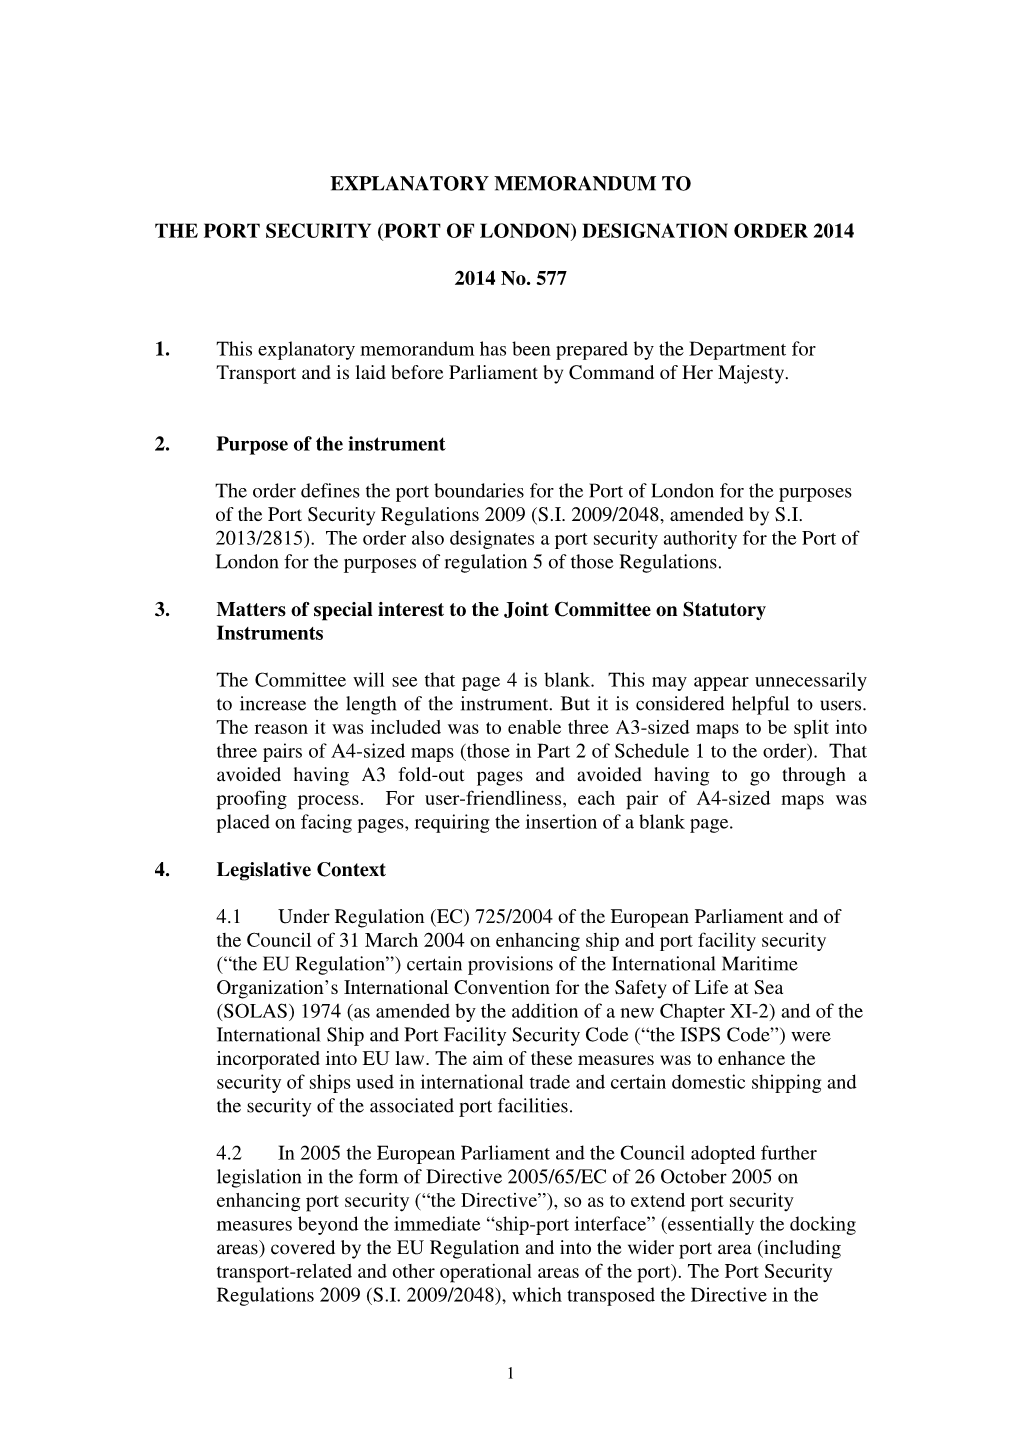 The Port Security (Port of London) Designation Order 2014